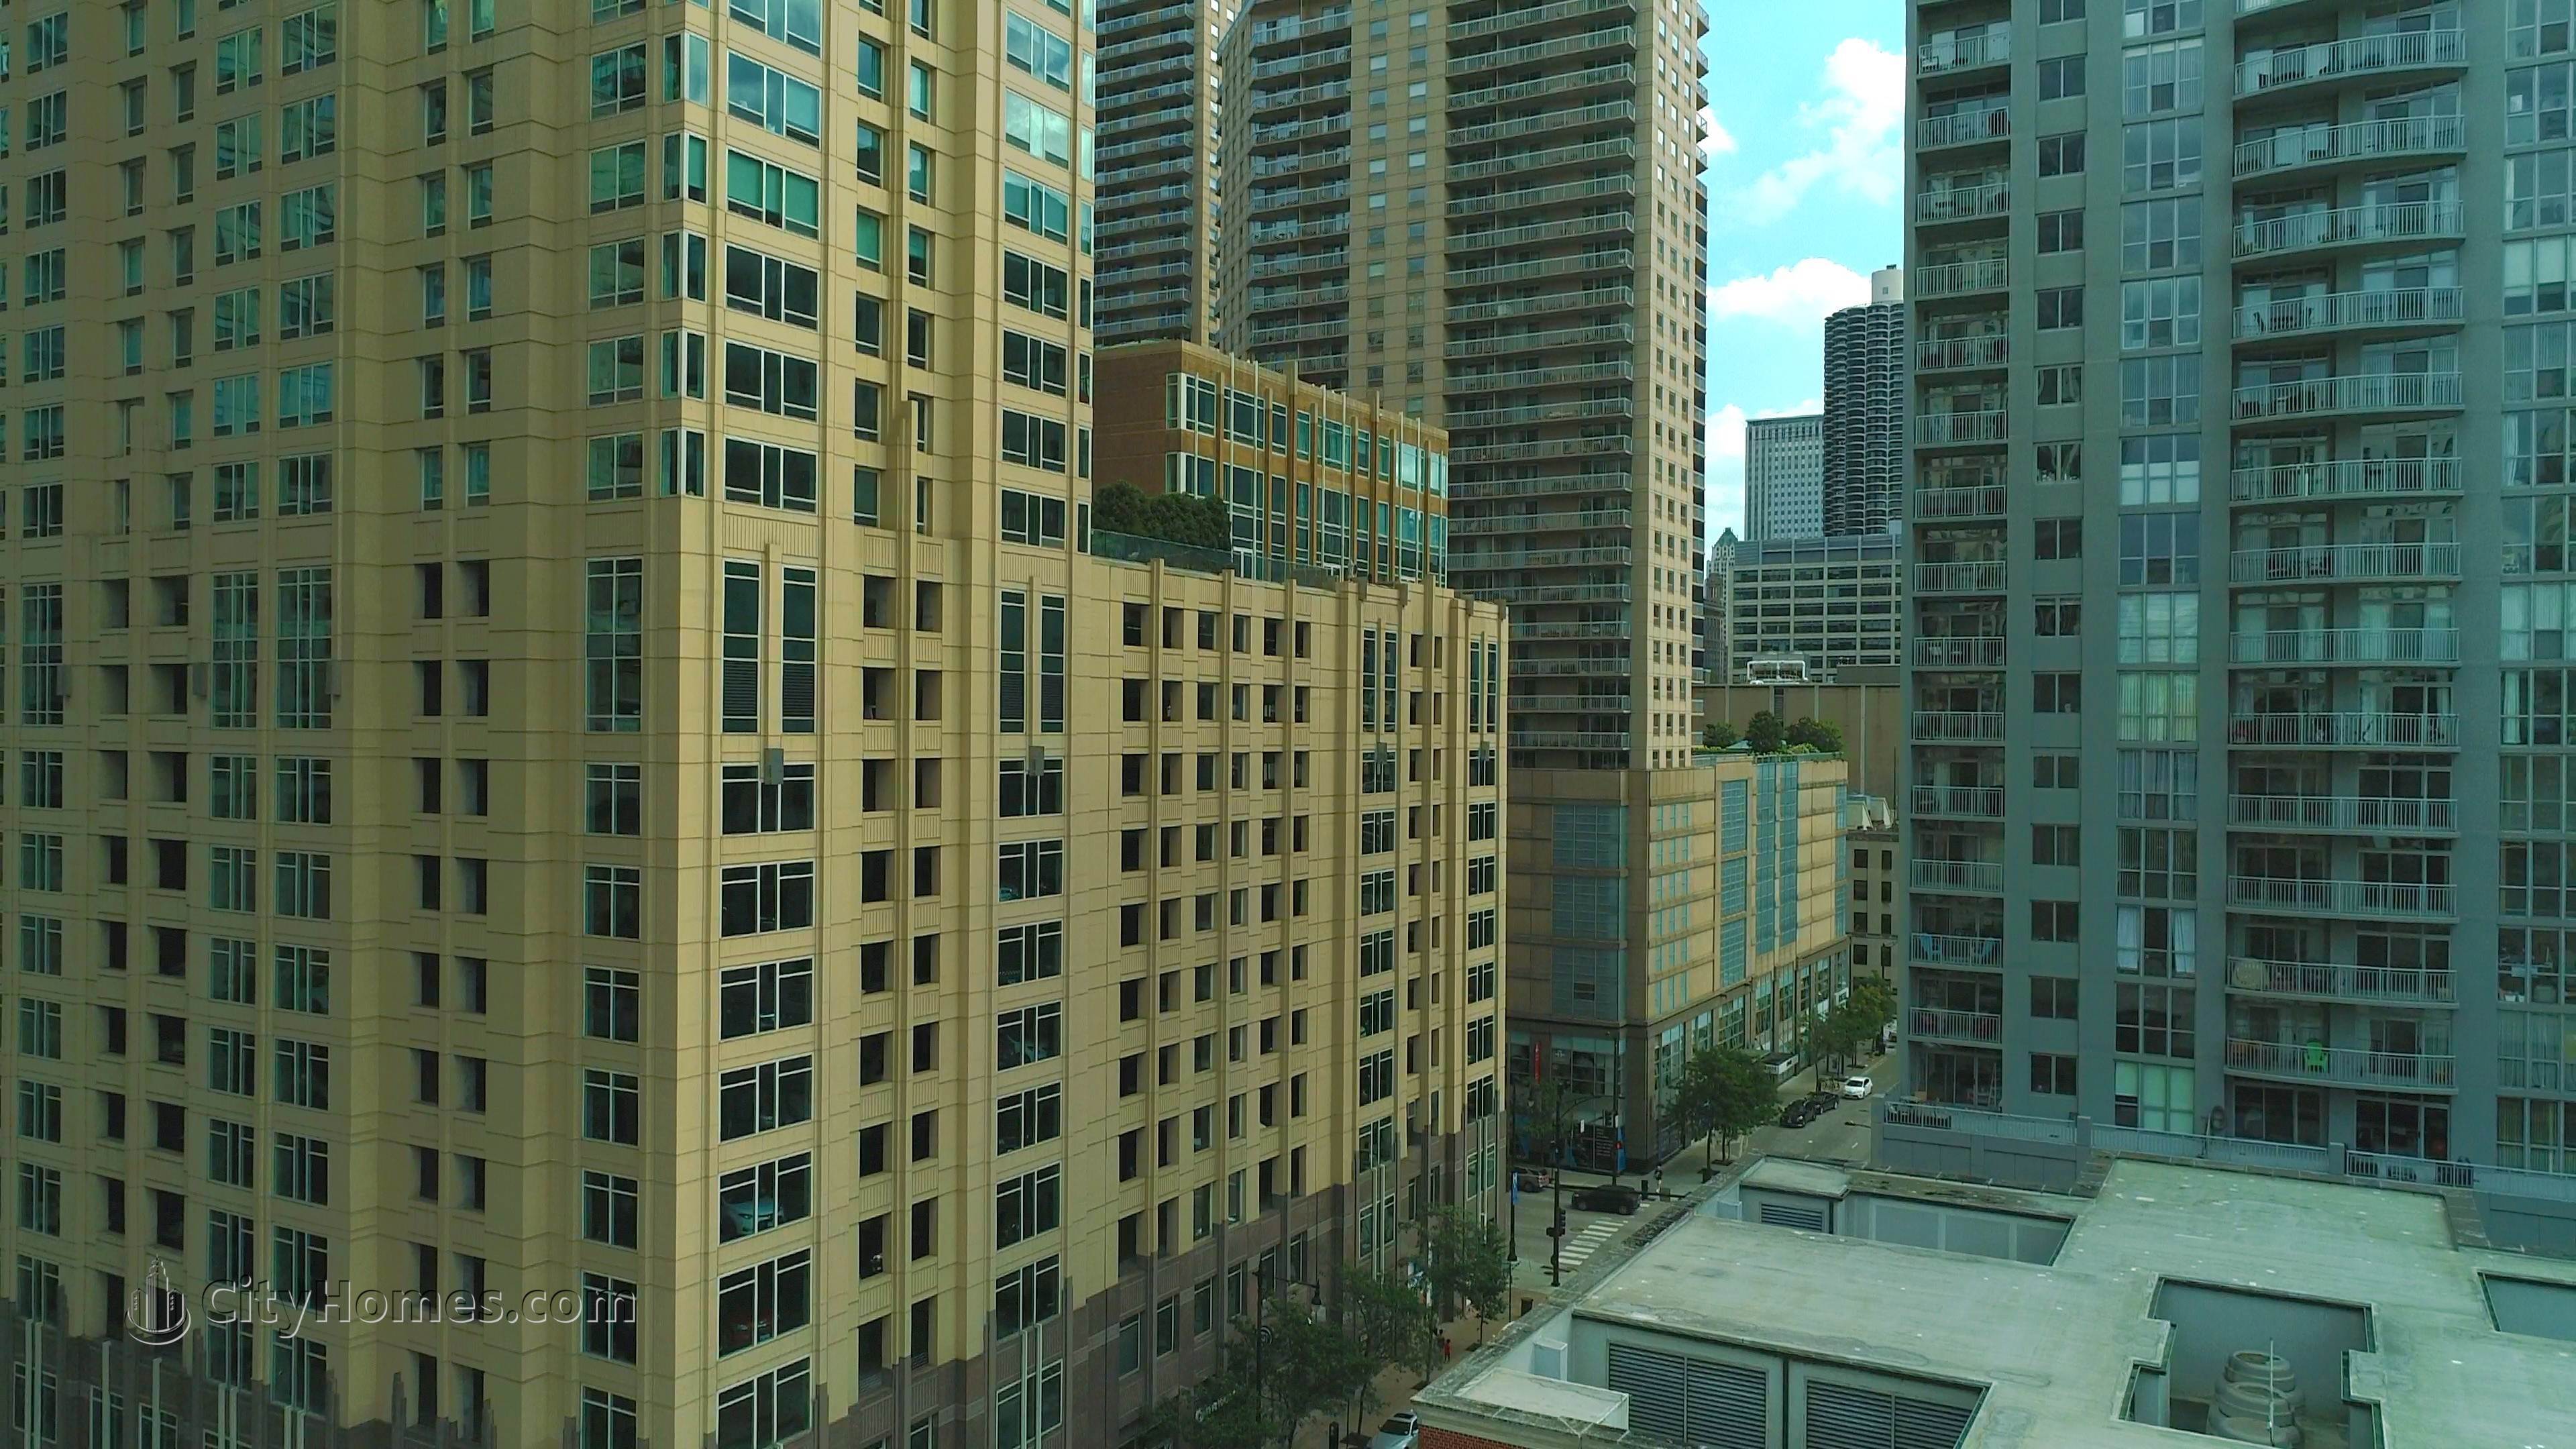 Millennium Centre building at 33 W Ontario St, Central Chicago, Chicago, IL 60610